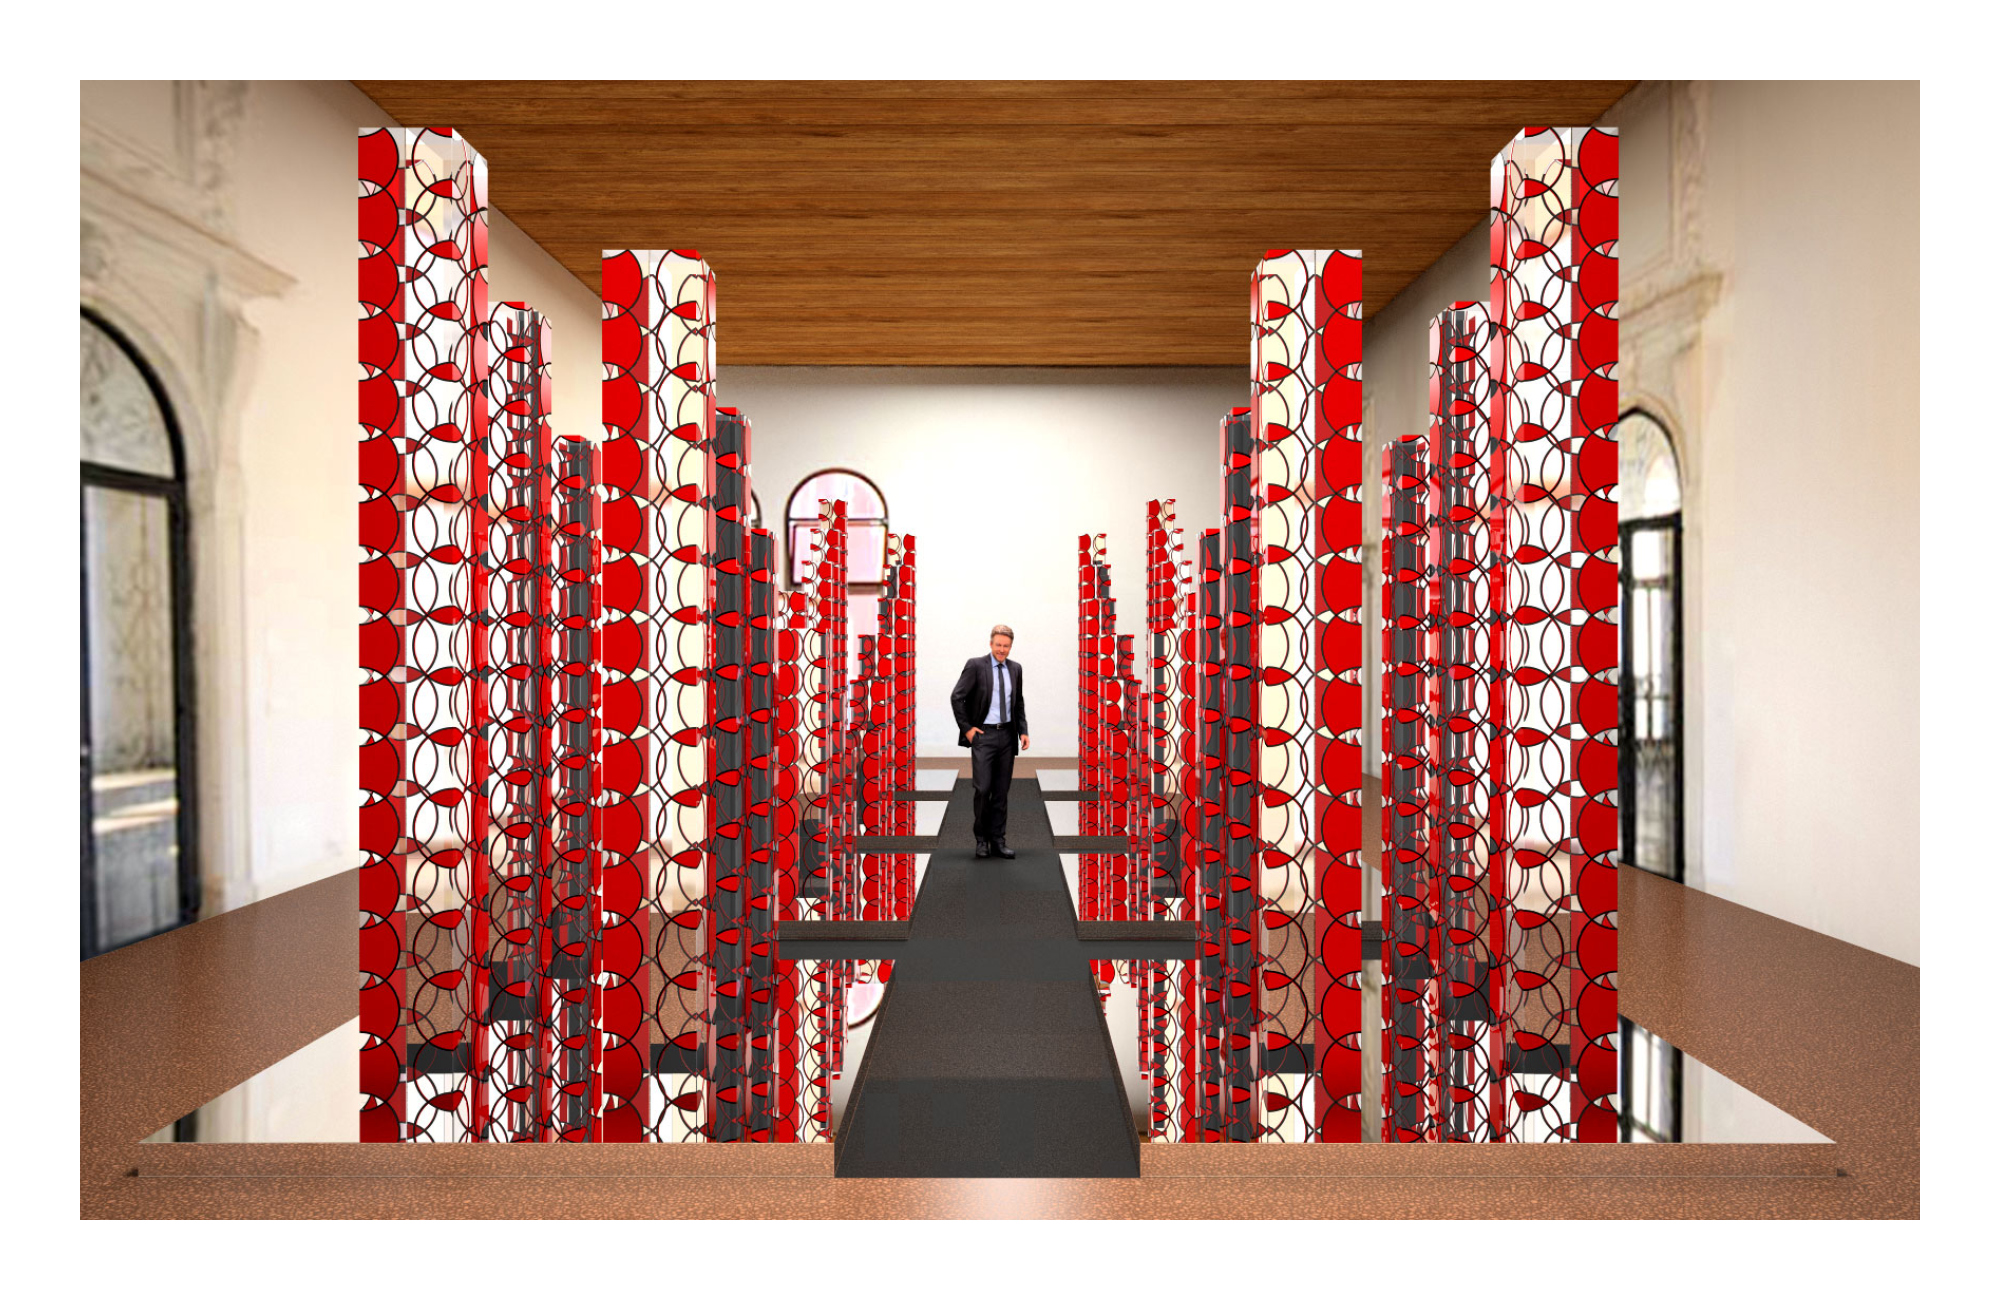 Project proposal Kinetic Columnsfor the Venice Architecture Biennale 2019